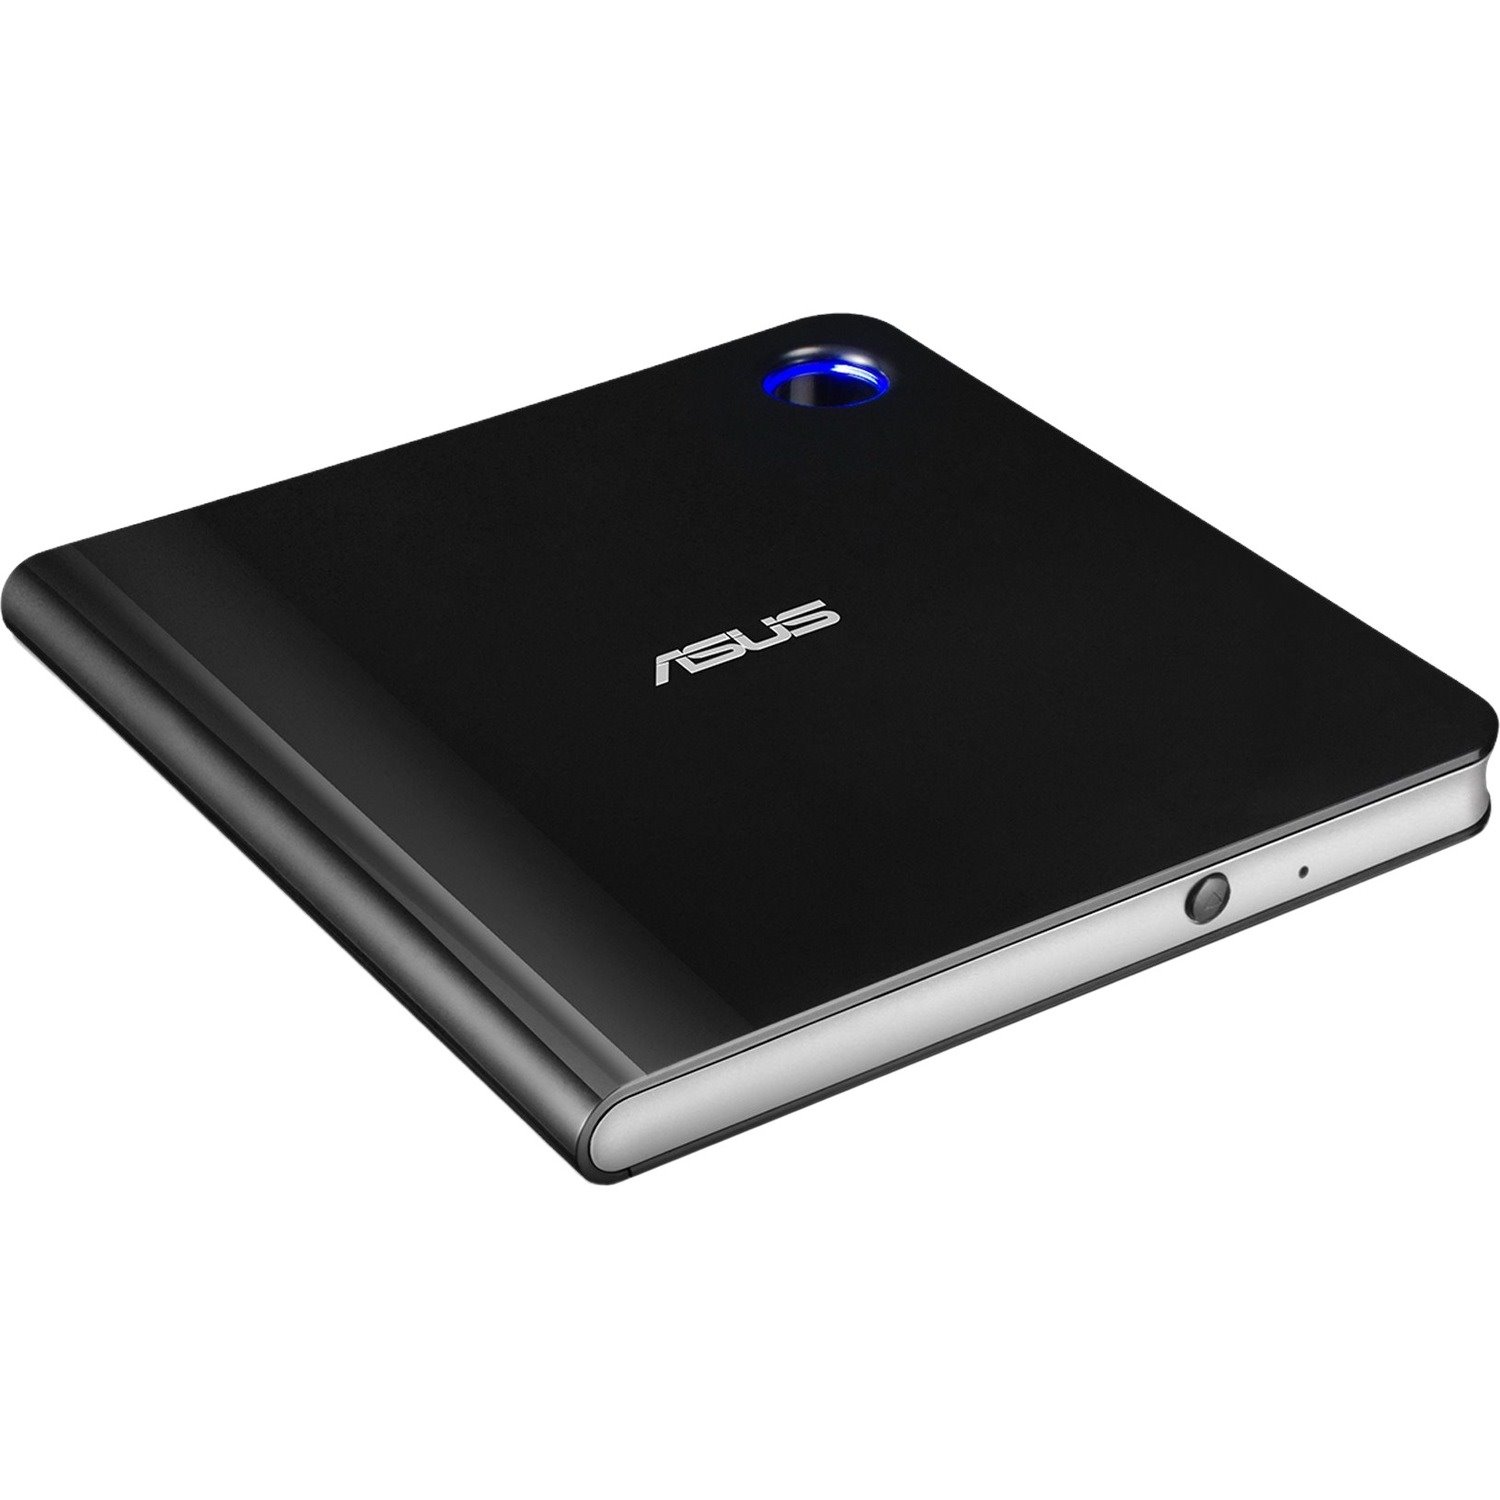 Asus SBW-06D5H-U Portable Blu-ray Writer - External - Retail Pack - Black